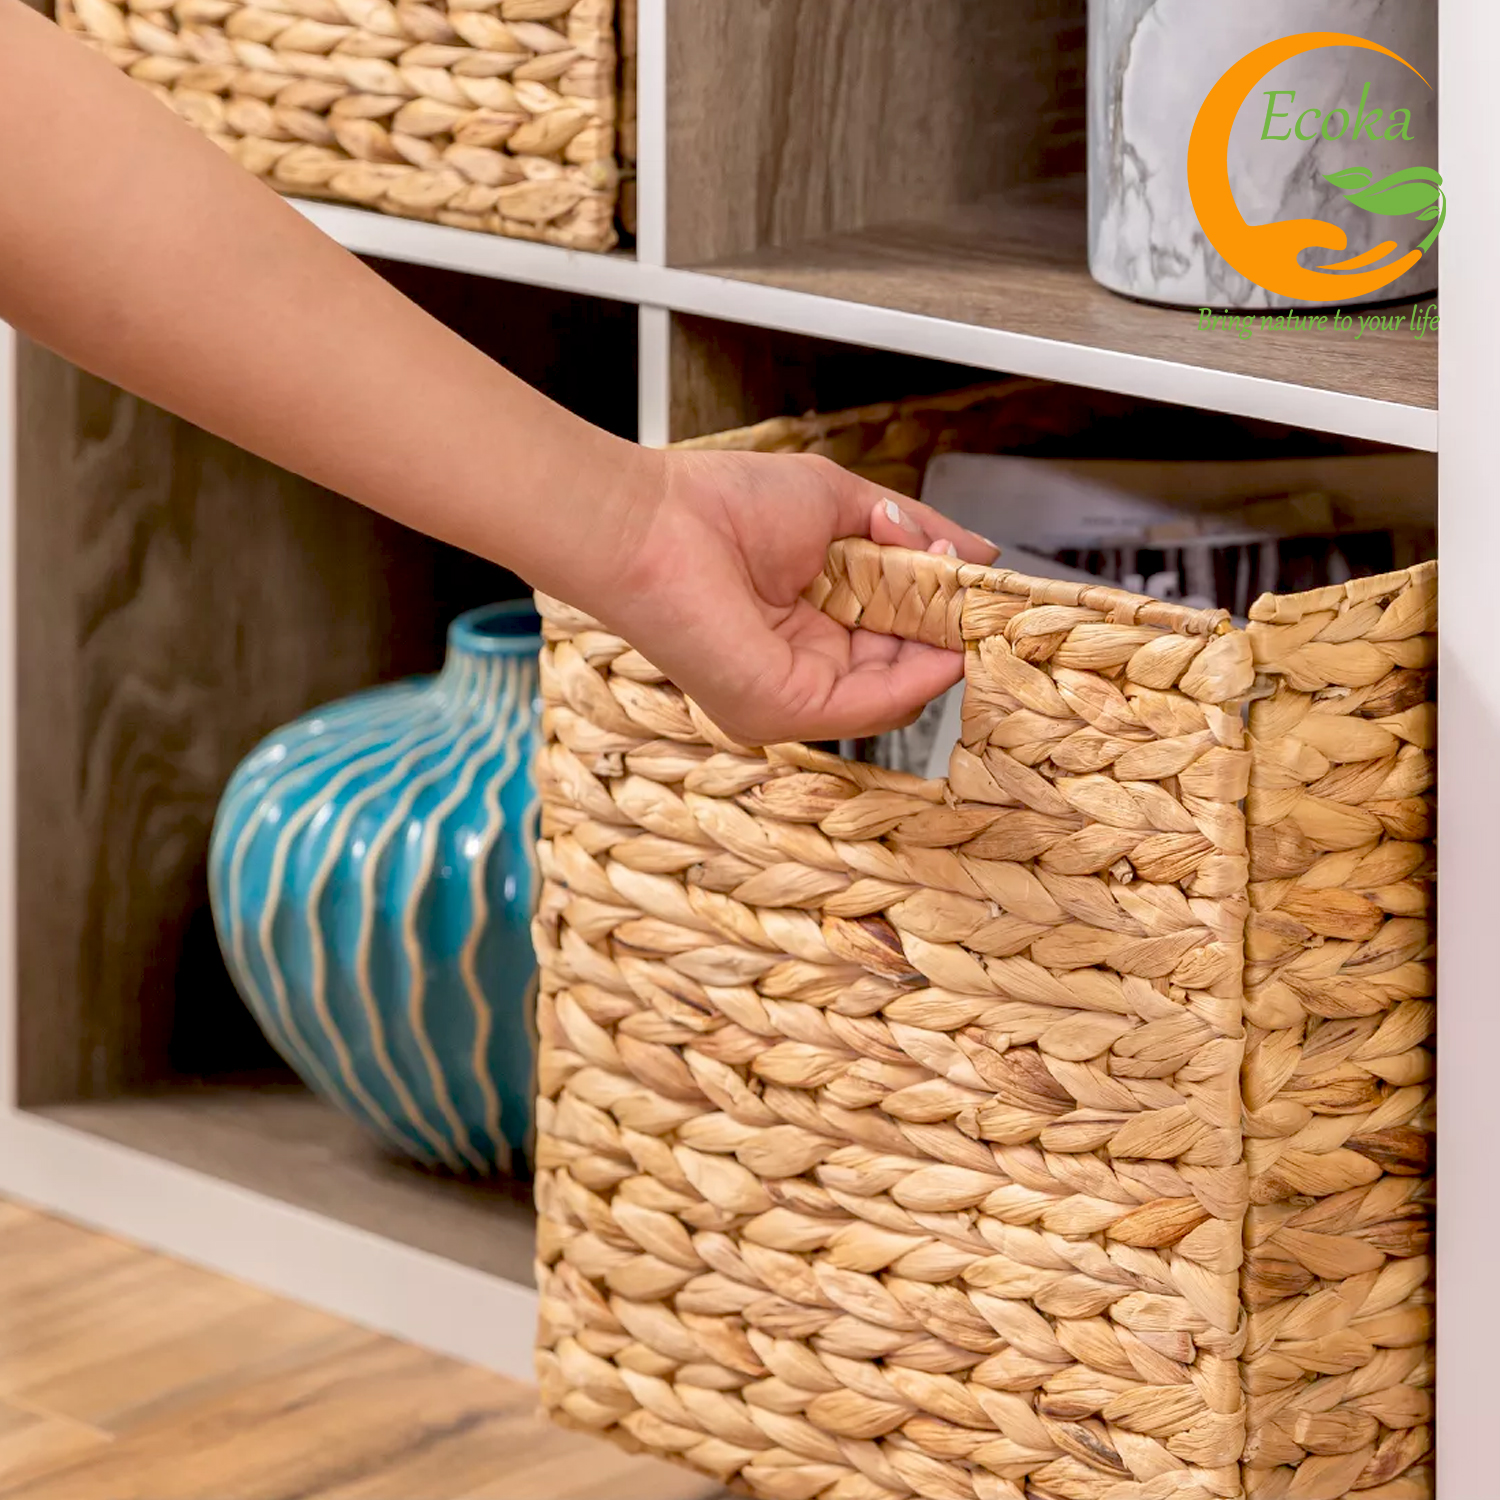 8 Water Hyacinth Storage Baskets Handwoven Laundry Organizer Totes For Bedroom Living Room Bathroom Shelves Wicker Storage Basket copy 1